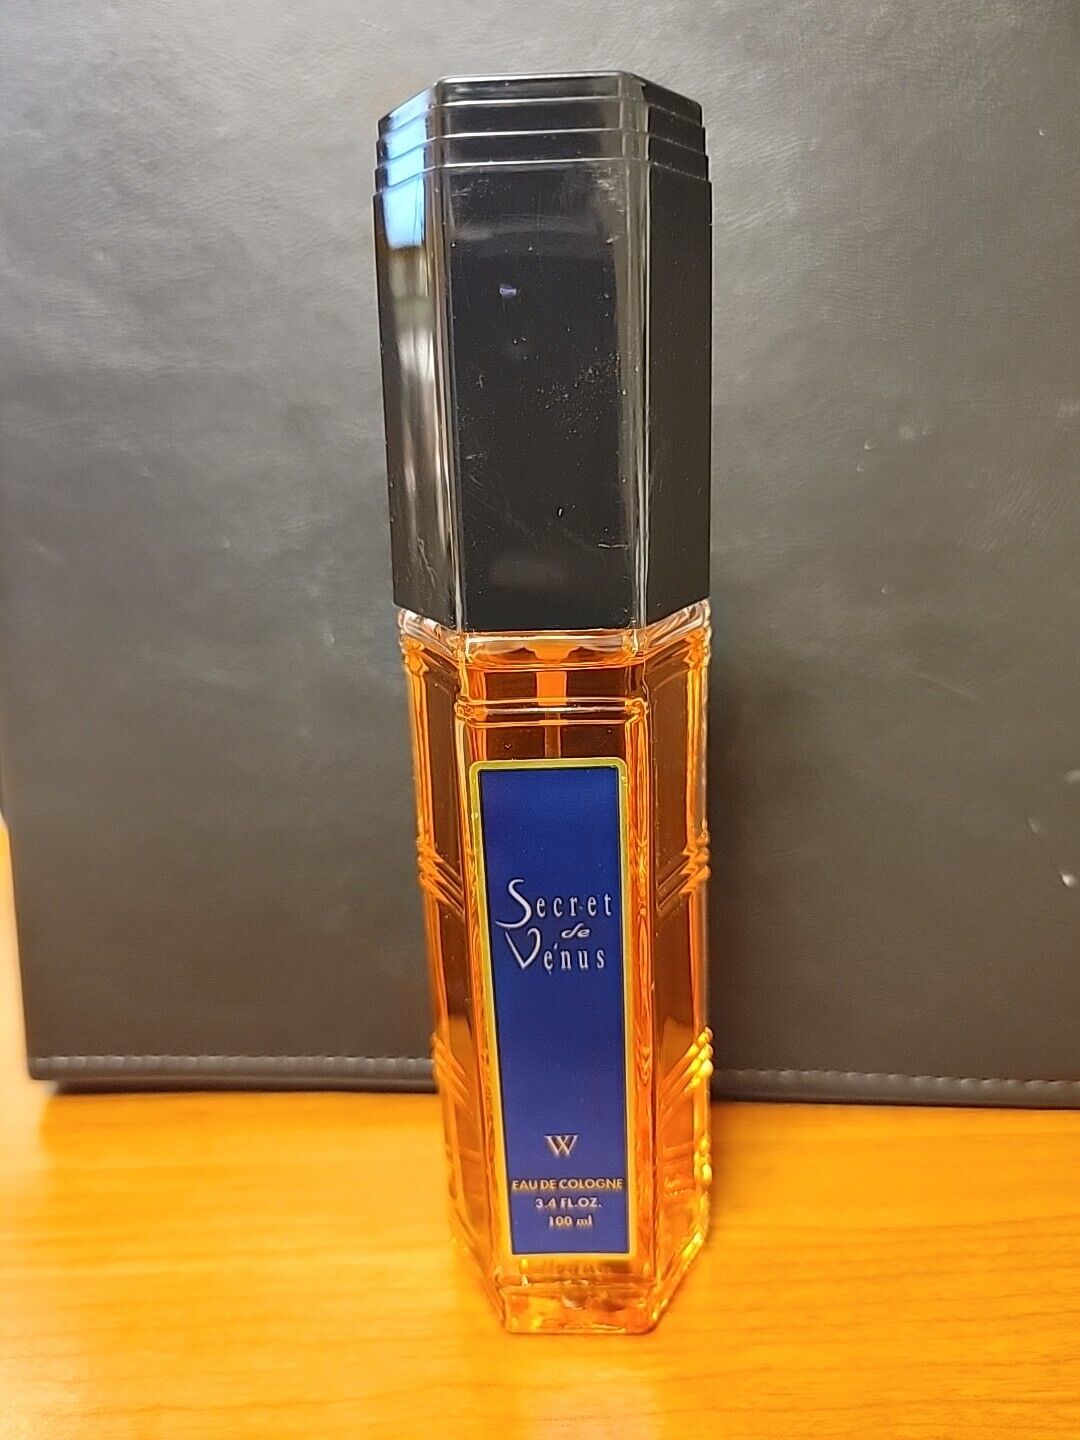 Secret de Venus Eau de Cologne Spray Perfume  Parfums Weil 3.4 fl oz No Box